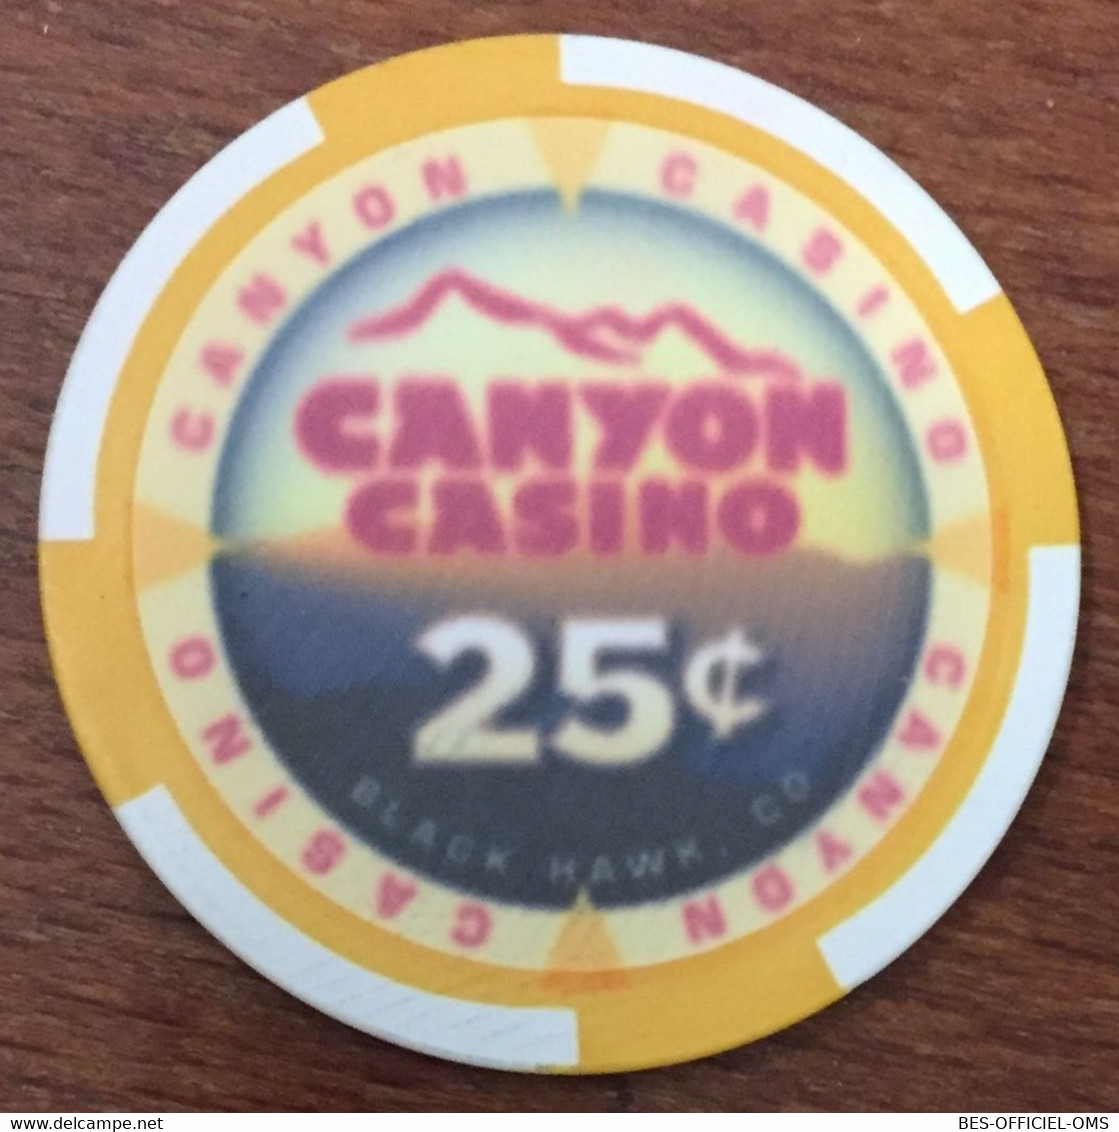 ÉTATS-UNIS USA COLORADO BLACK HAWK CANYON CASINO INDIAN CHIP 25 C JETON TOKEN COIN CLOSED FERMÉ - Casino